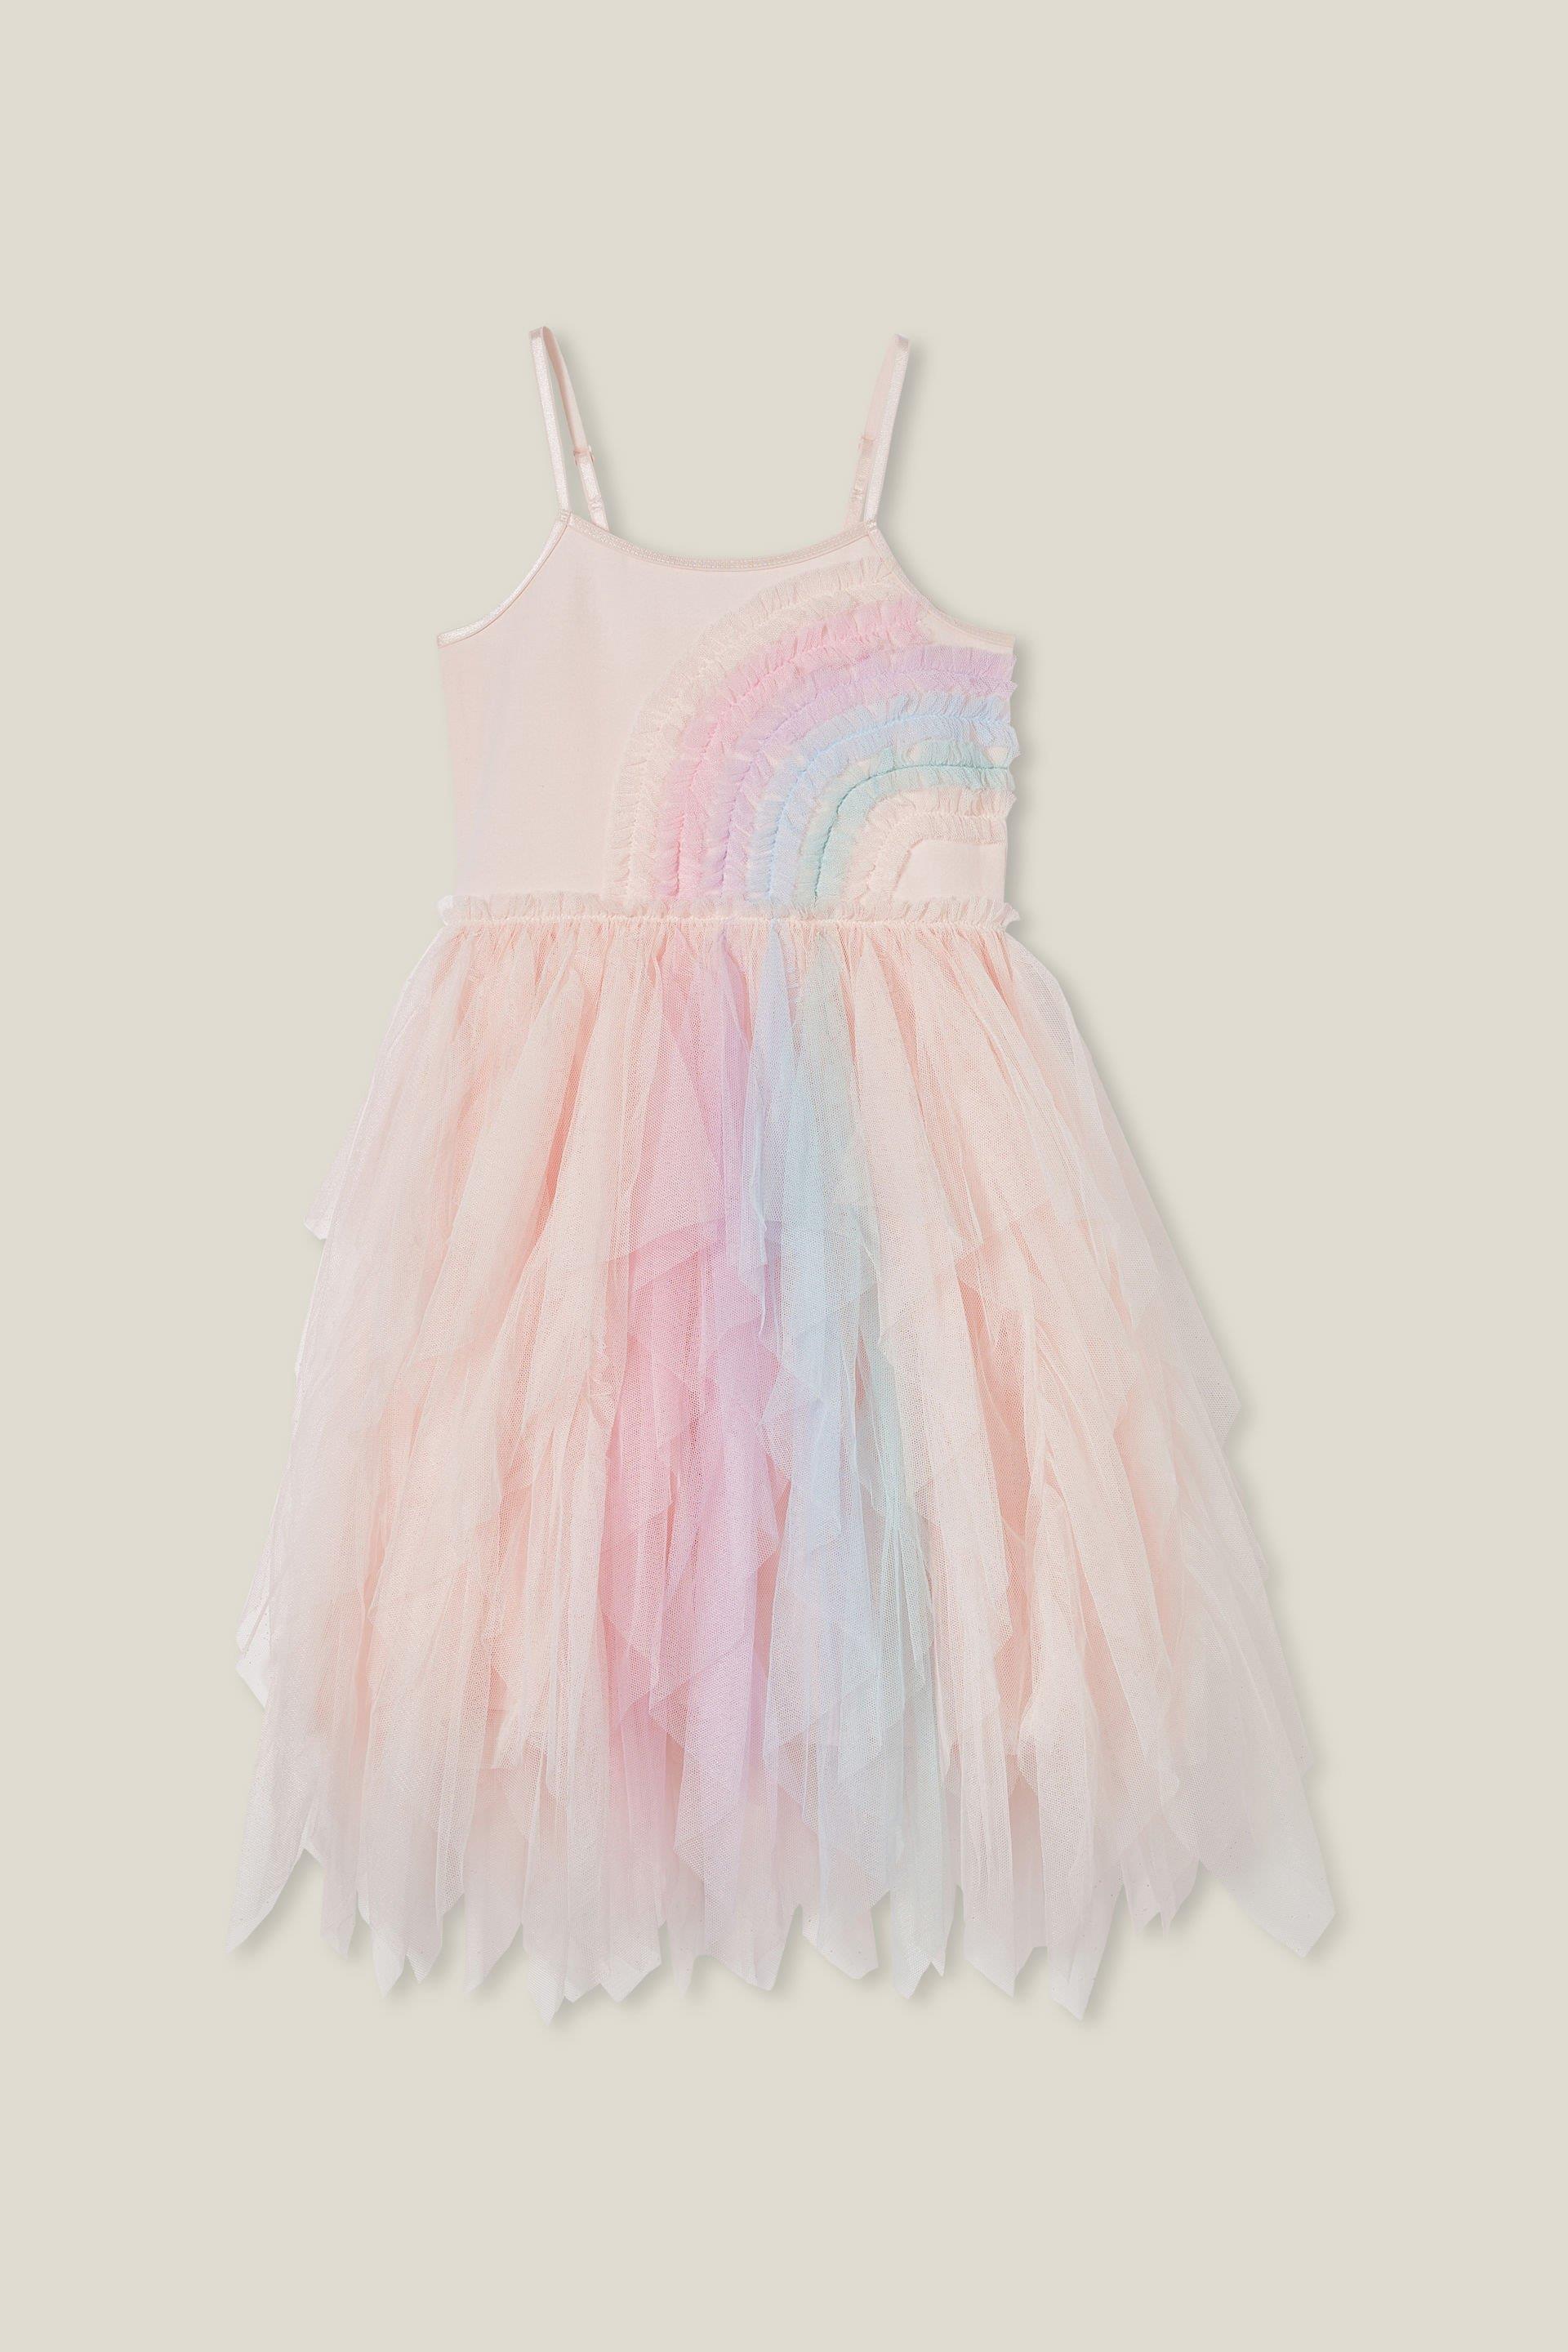 Cotton On Kids - Iris Dress Up Dress - Crystal pink/rainbow